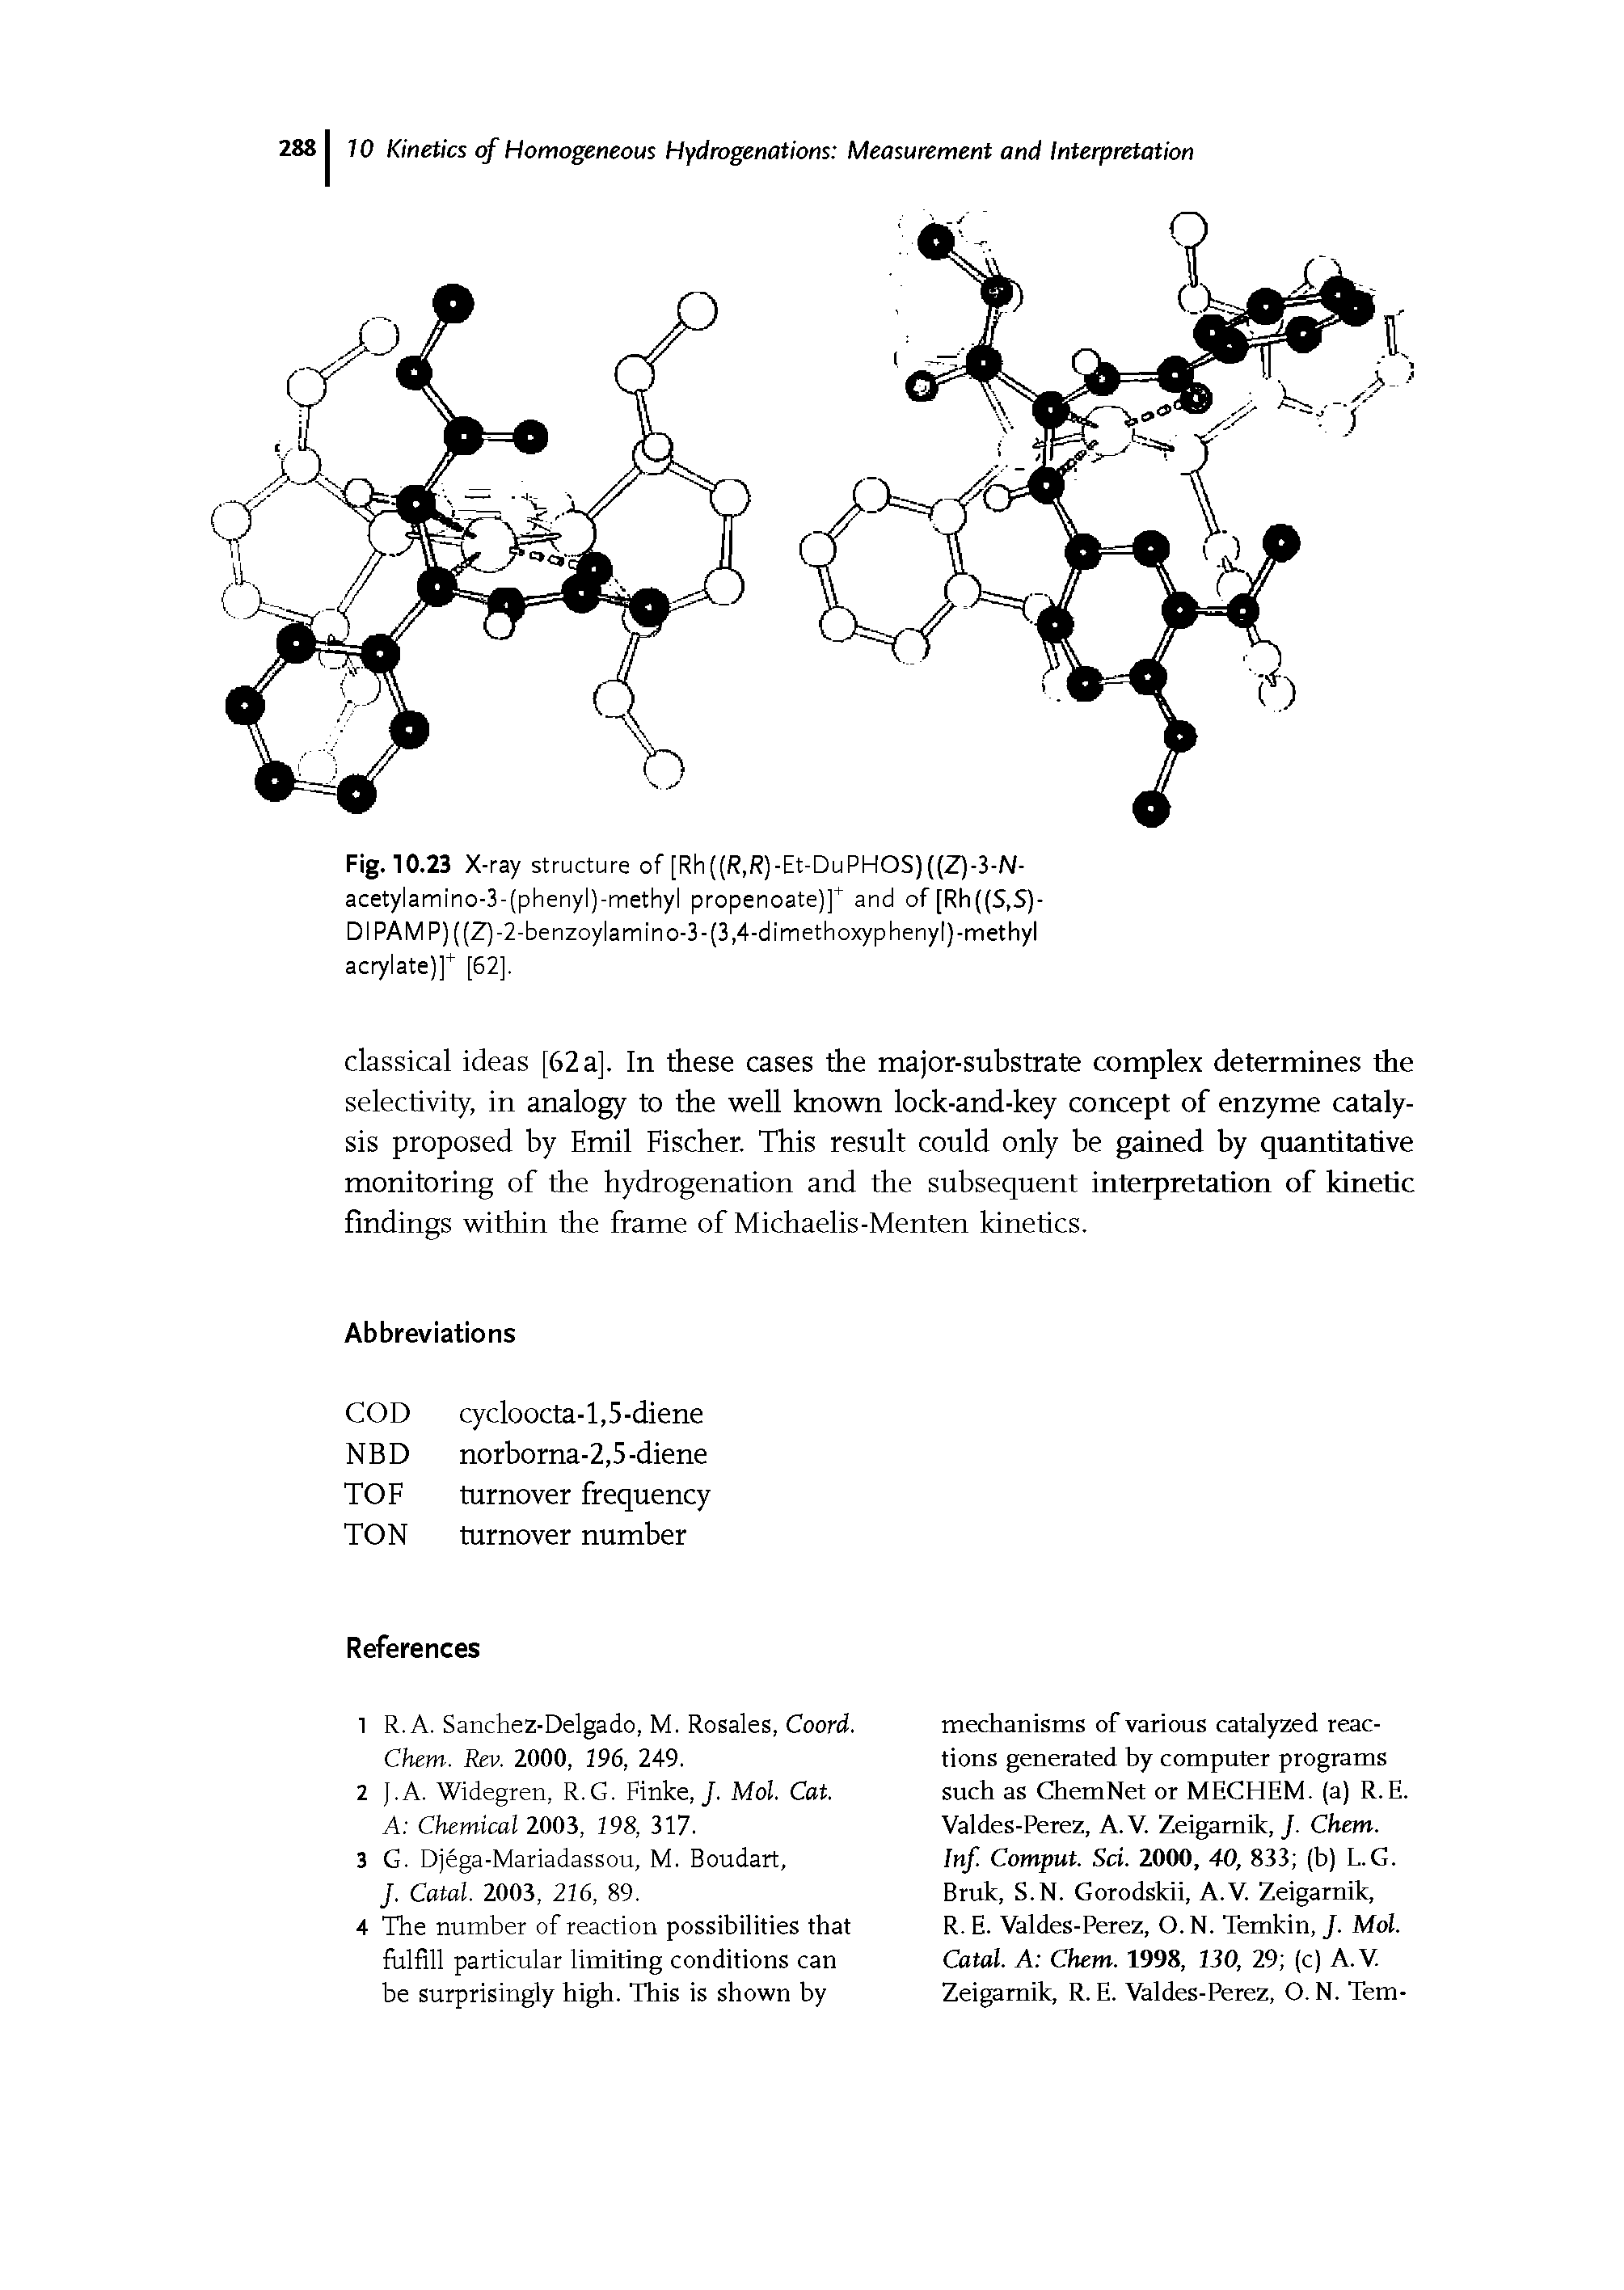 Fig. 10.23 X-ray structure of [Rh((R,R)-Et-DuPHOS)((Z)-3-N-acetylamino-3-(phenyl)-methyl propenoate)]+ and of[Rh((S,S)-DIPAMP)((Z)-2-benzoylamino-3-(3,4-dimethoxyphenyl)-methyl acrylate)]+ [62],...